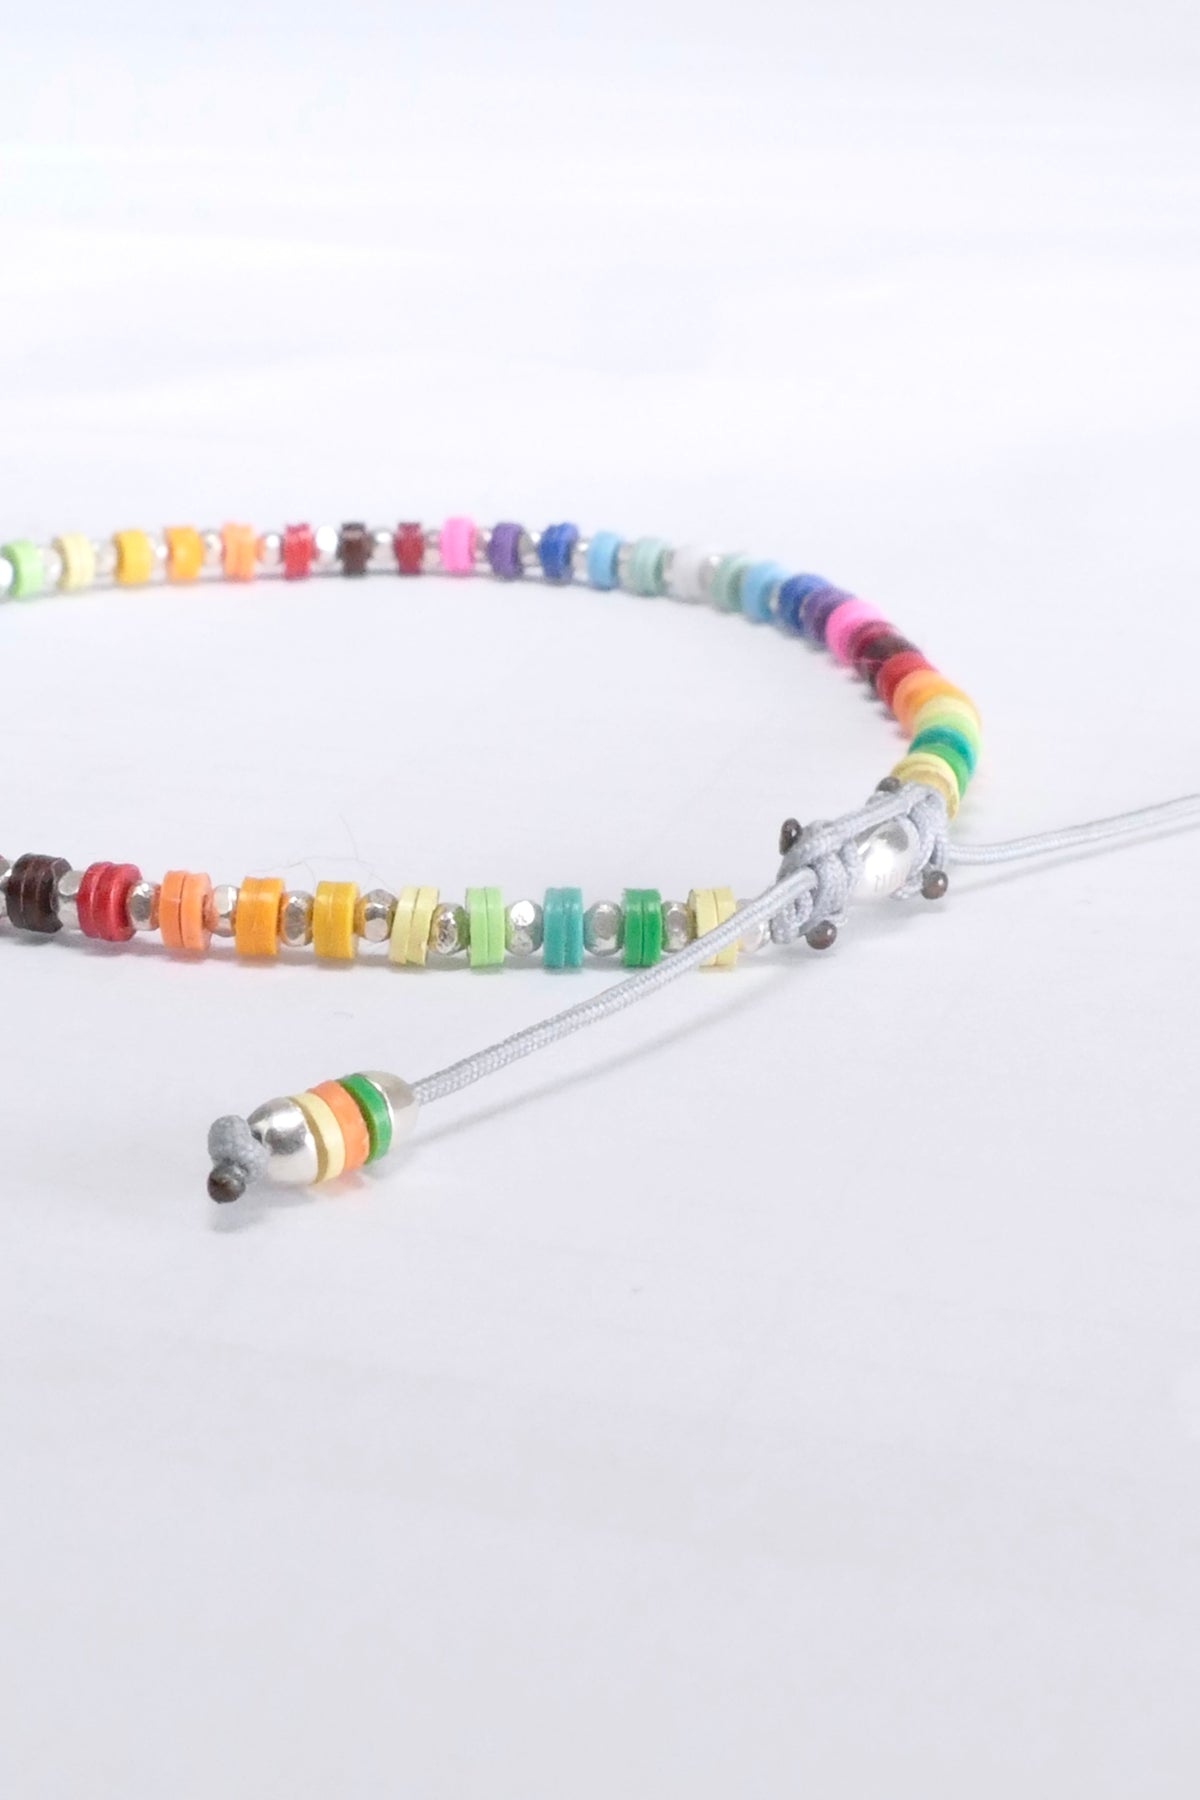 M.Cohen by MAOR Mini Rize Bracelet - Rainbow